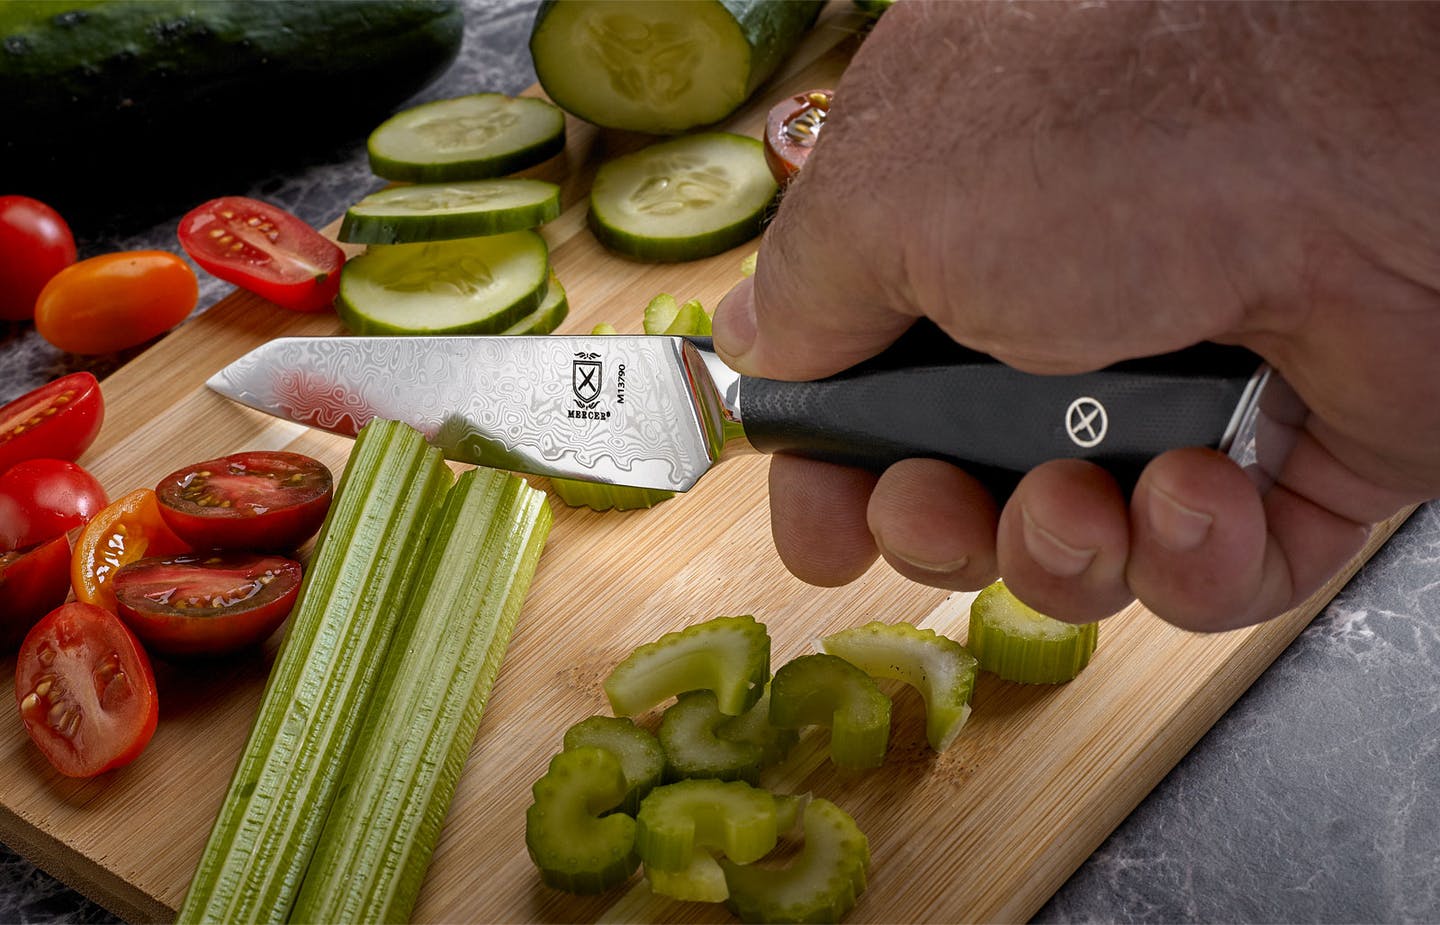 Mercer Culinary M13790 Premium Grade Super Steel, 5" Utility Knife, G10 Handle